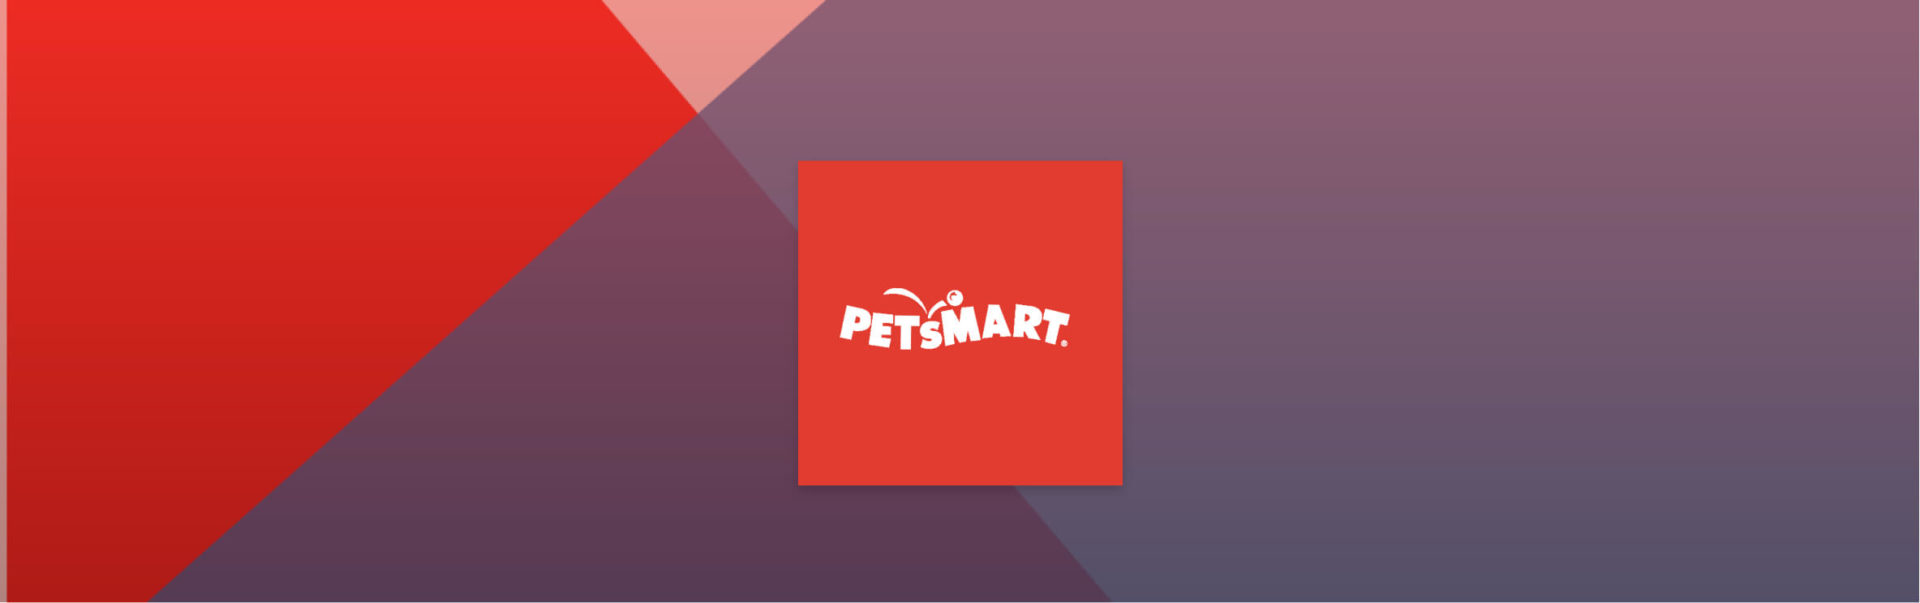 Customizing employee incentive swag for PetSmart